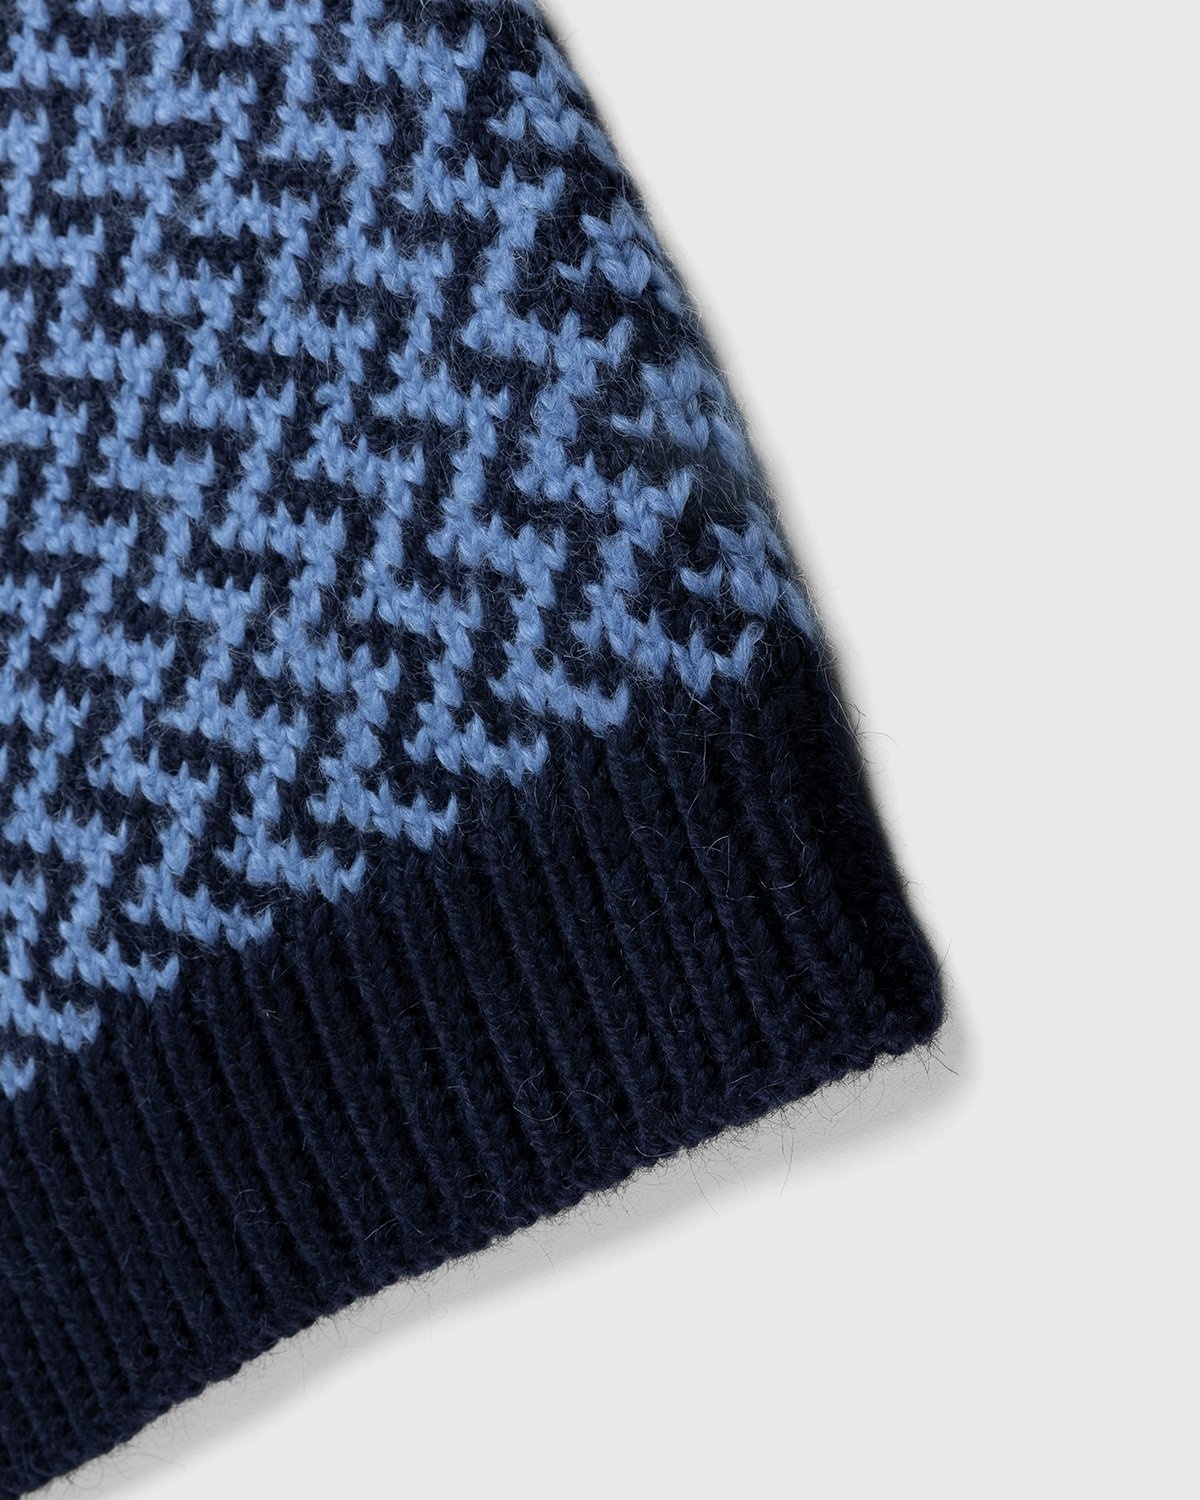 Jil Sander – Vest Knitted Blue - Knitwear - Blue - Image 6